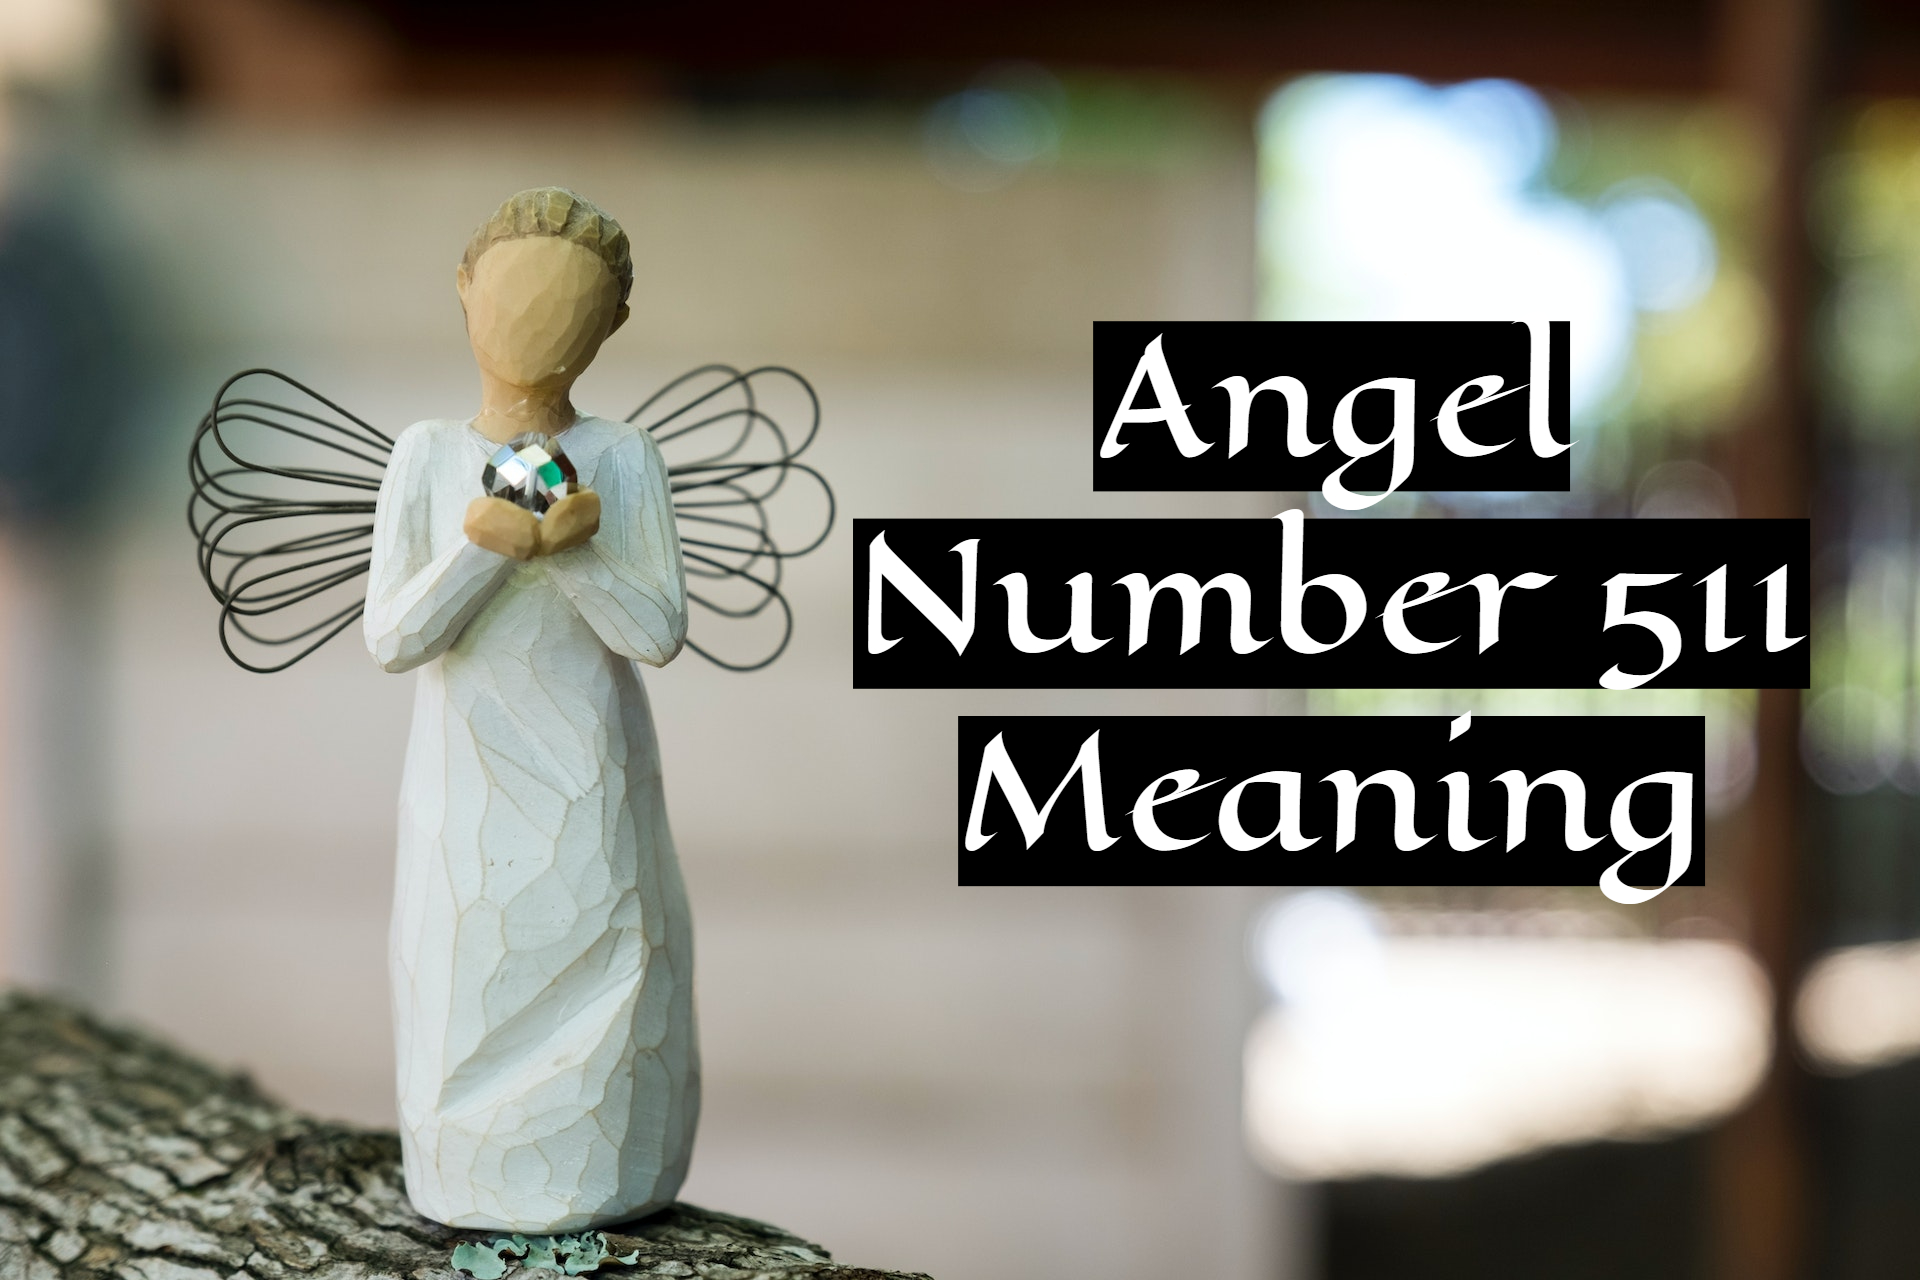 Angel Number 511 Meaning - Symbolism And Spiritual Interpretation